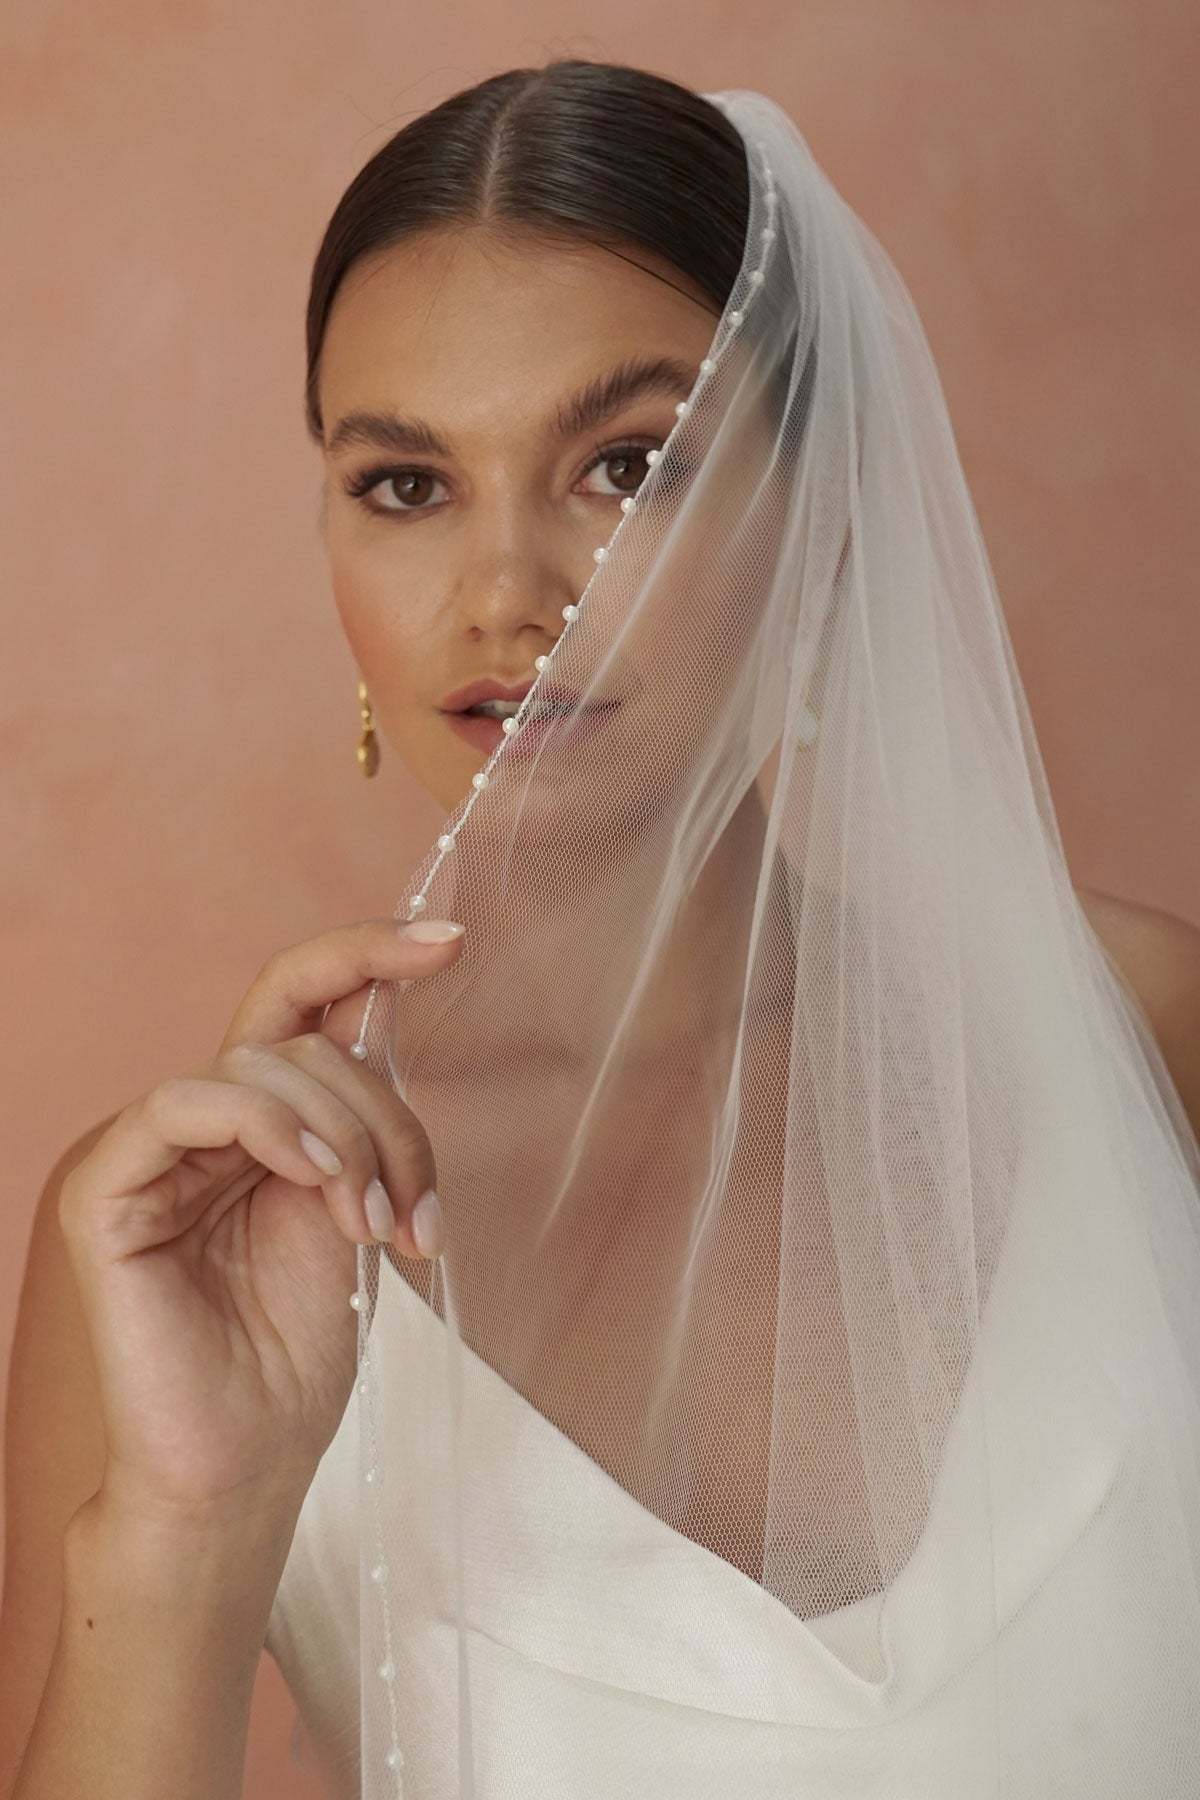 A model wearing a pearl edge wedding veil